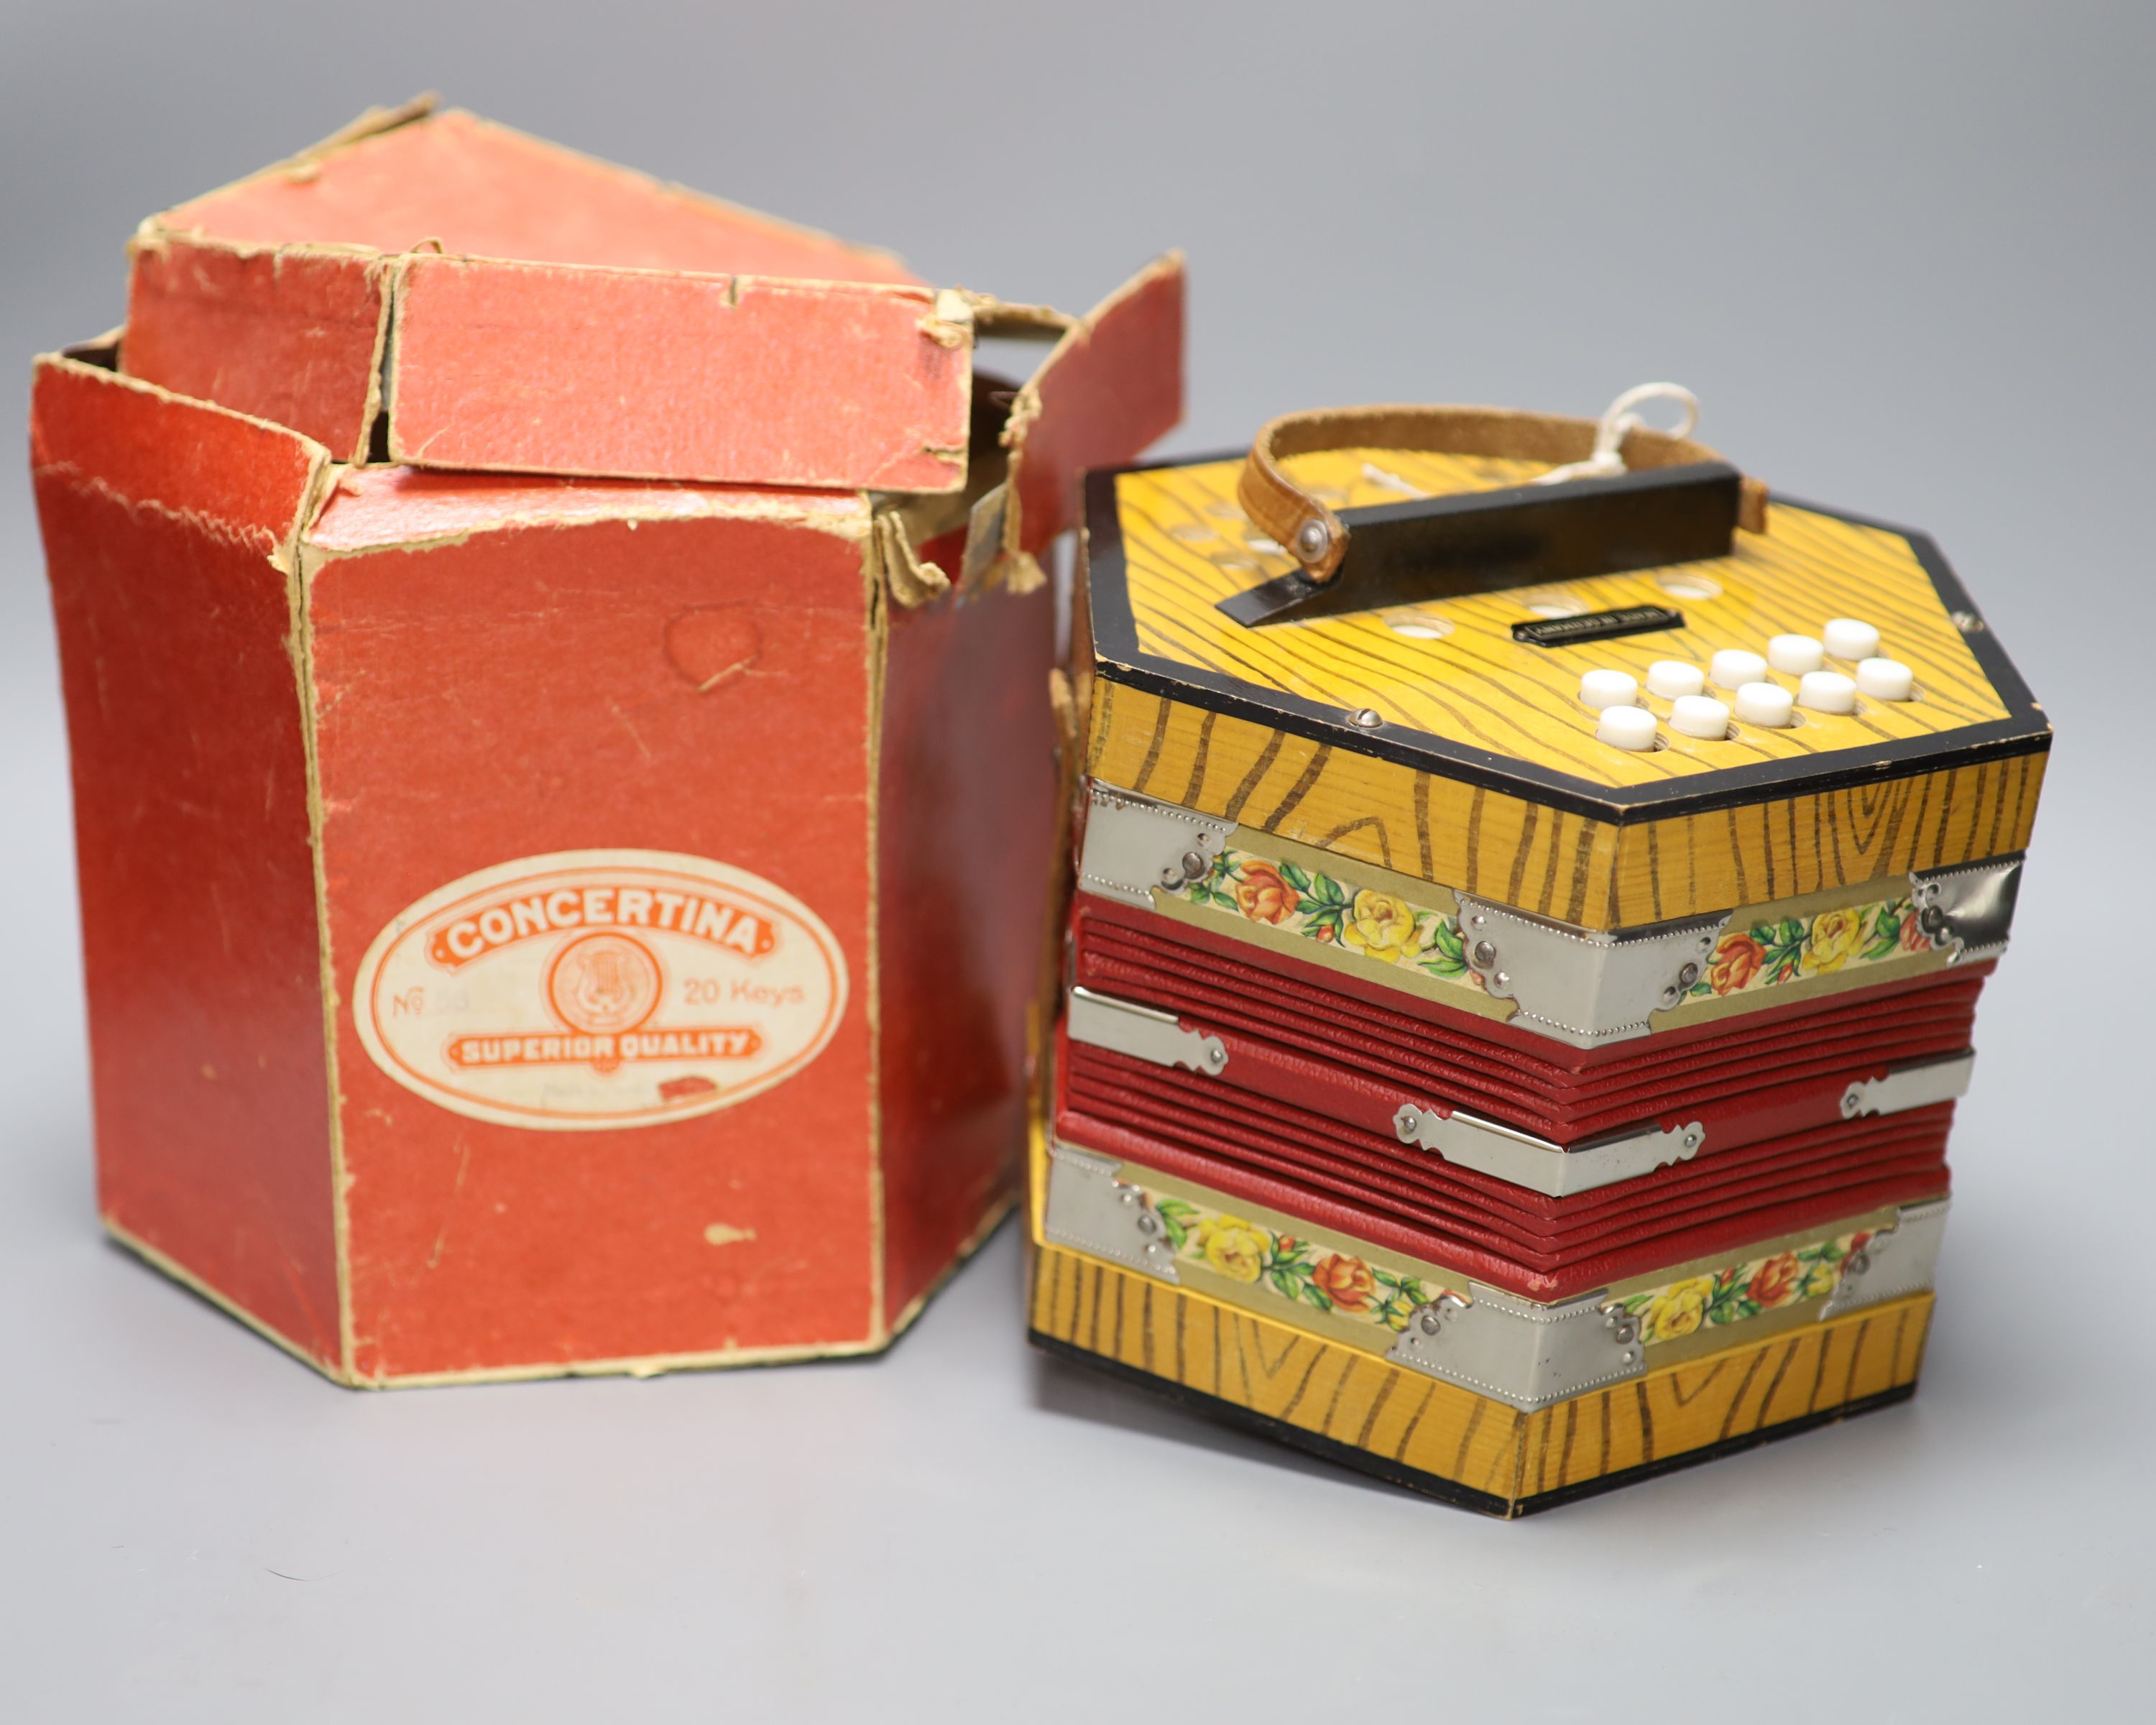 A Bandmaster concertina, rare in original box